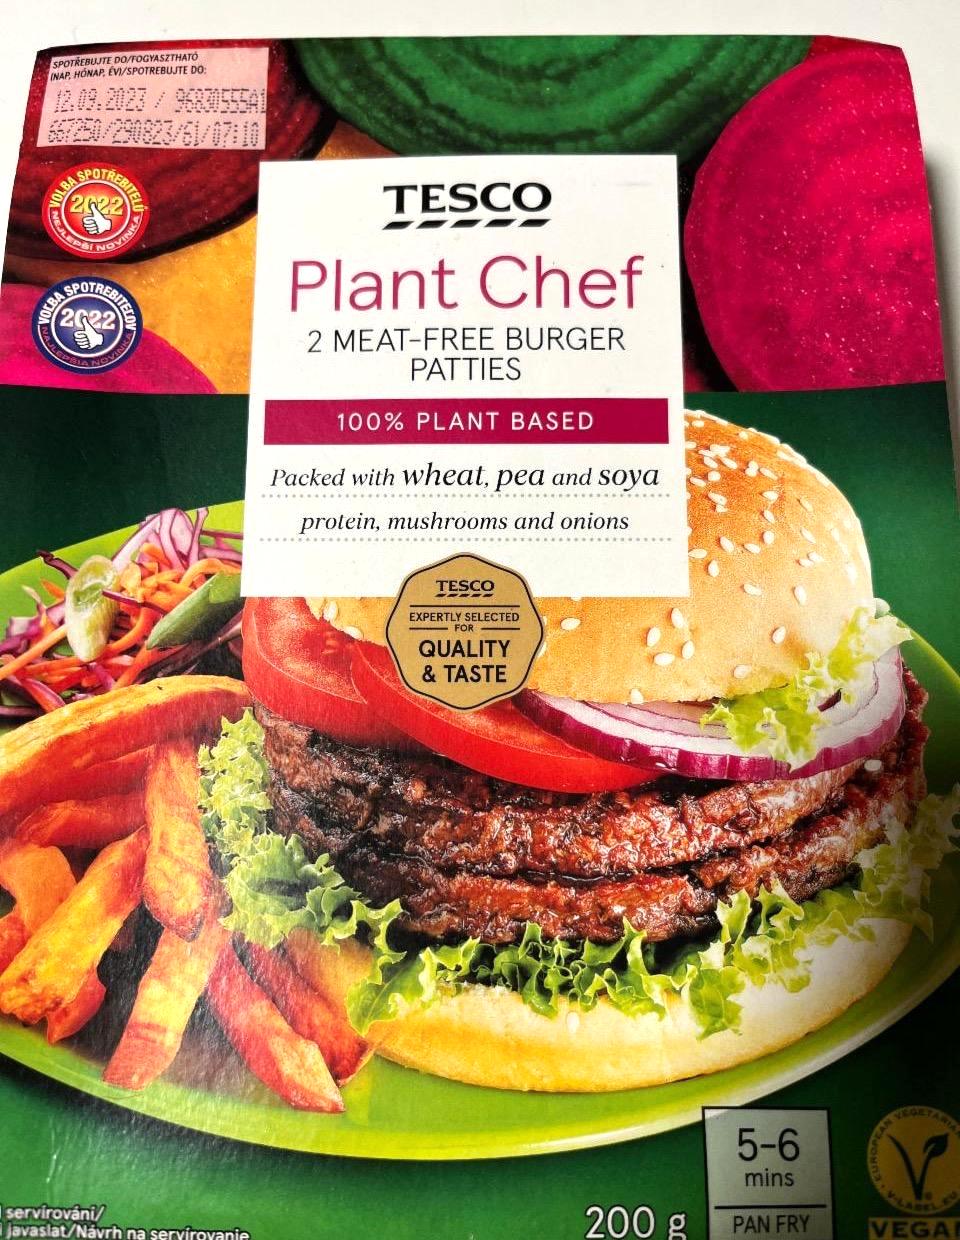 Képek - Plant Chef 2 Meat-Free burger patties Tesco